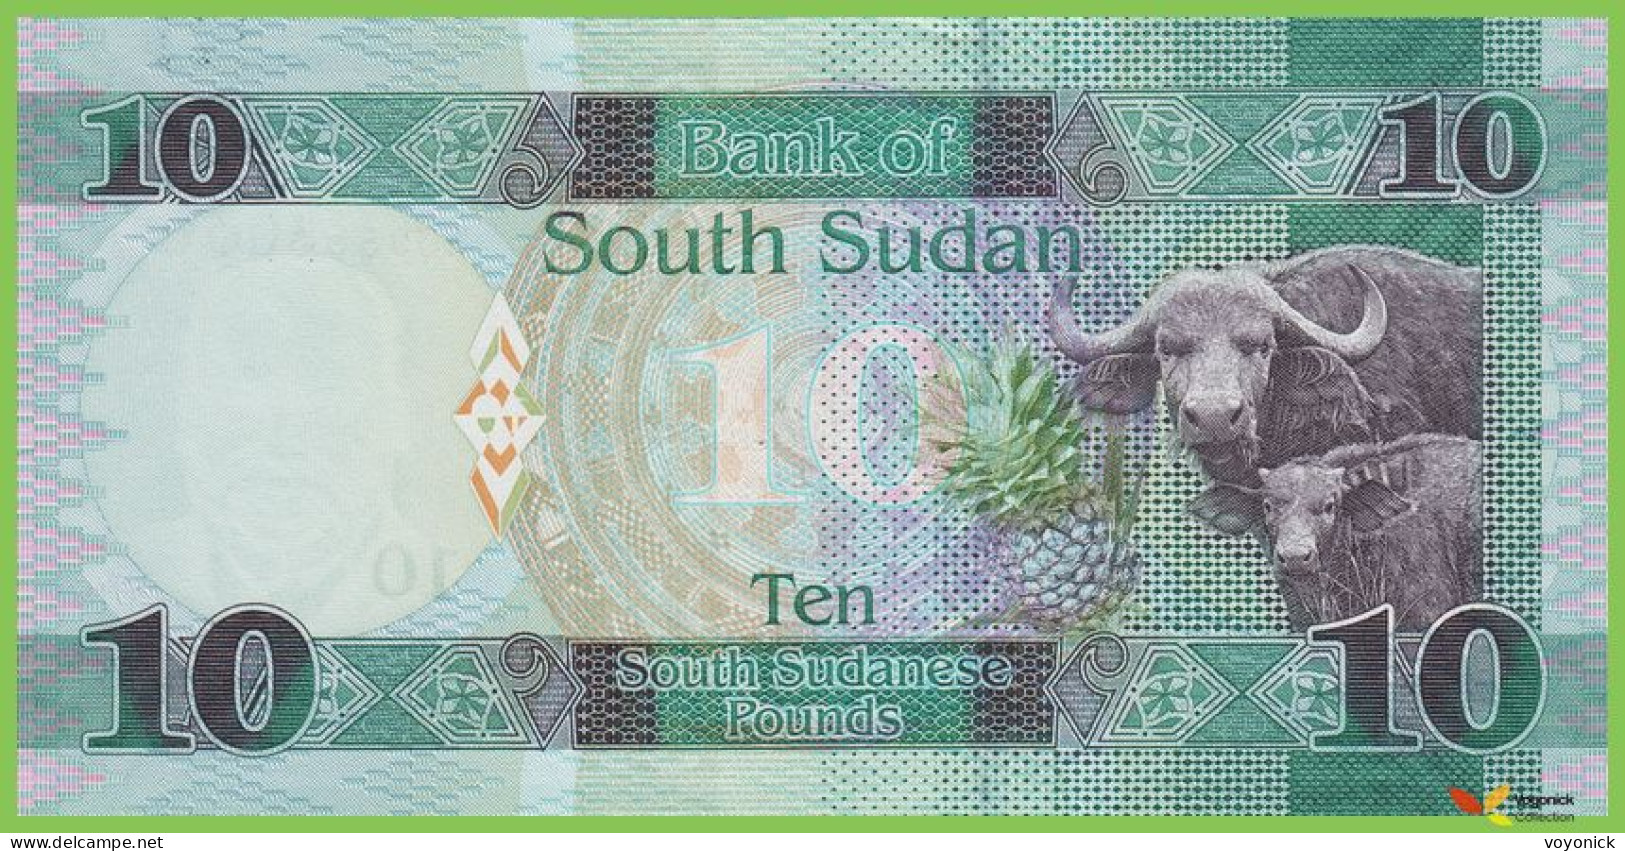 Voyo SOUTH SUDAN 10 South Sudanese Pounds 2016 P12b B112b AU UNC - South Sudan